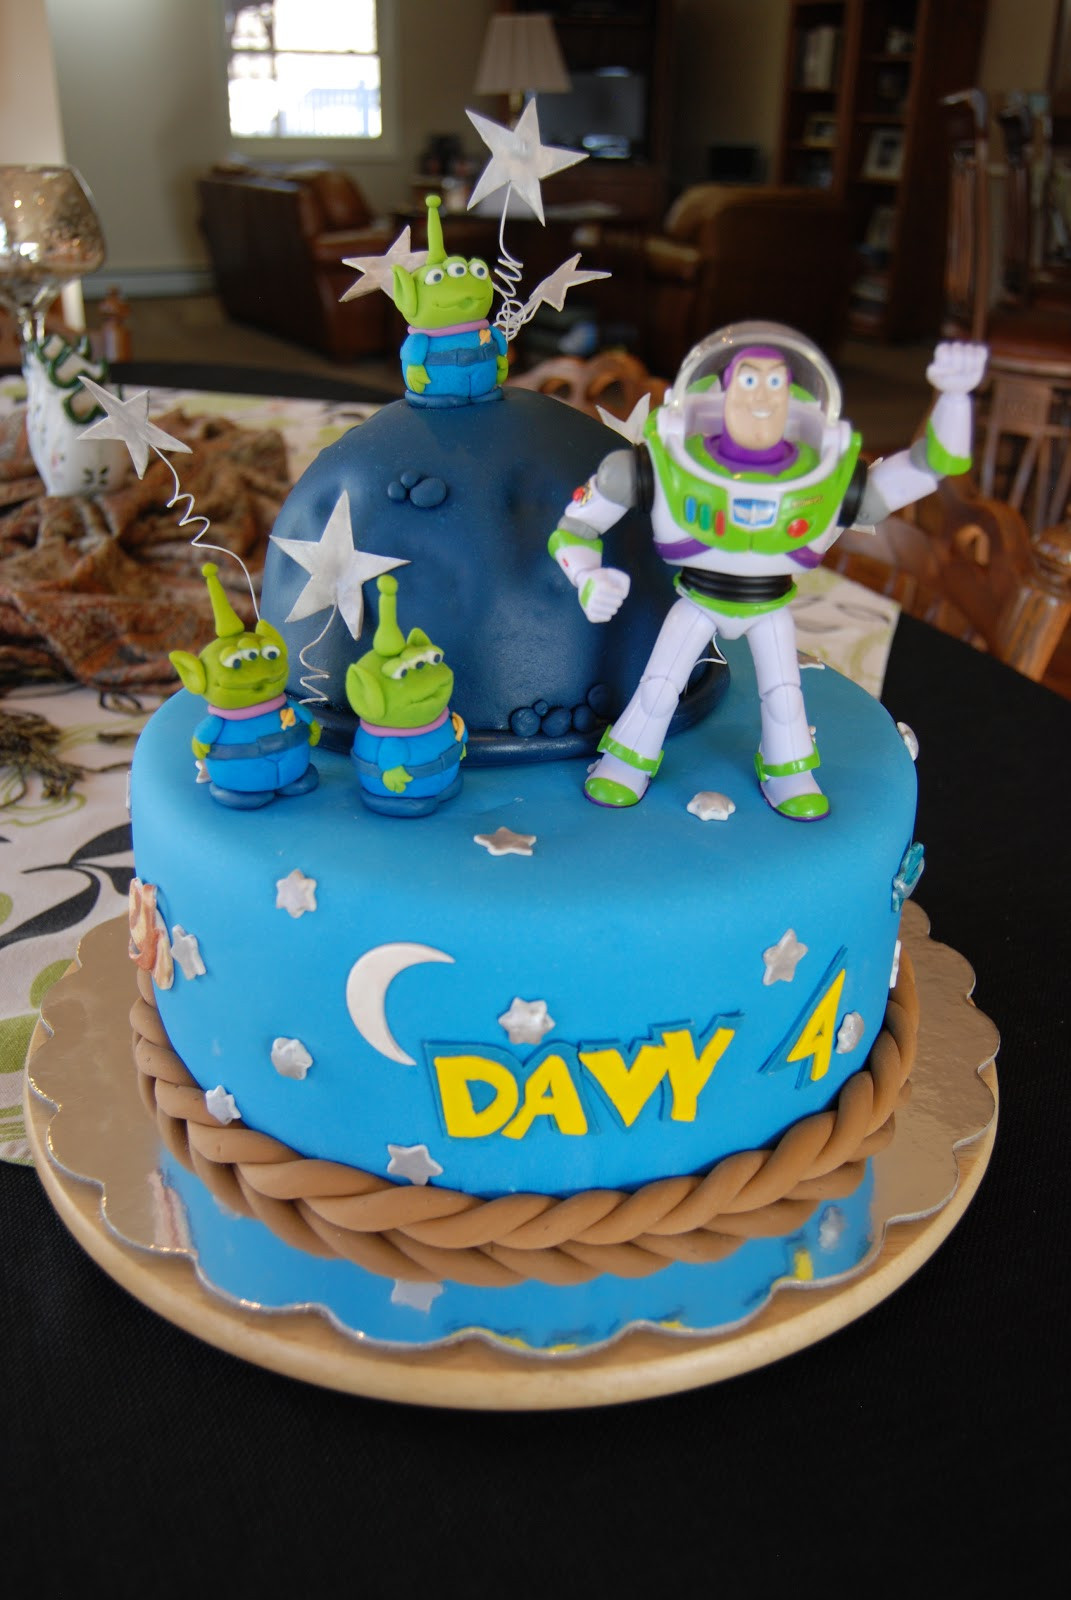 4th Birthday Cake
 Gamma Susie s This n That Davy s Fourth Birthday Cake